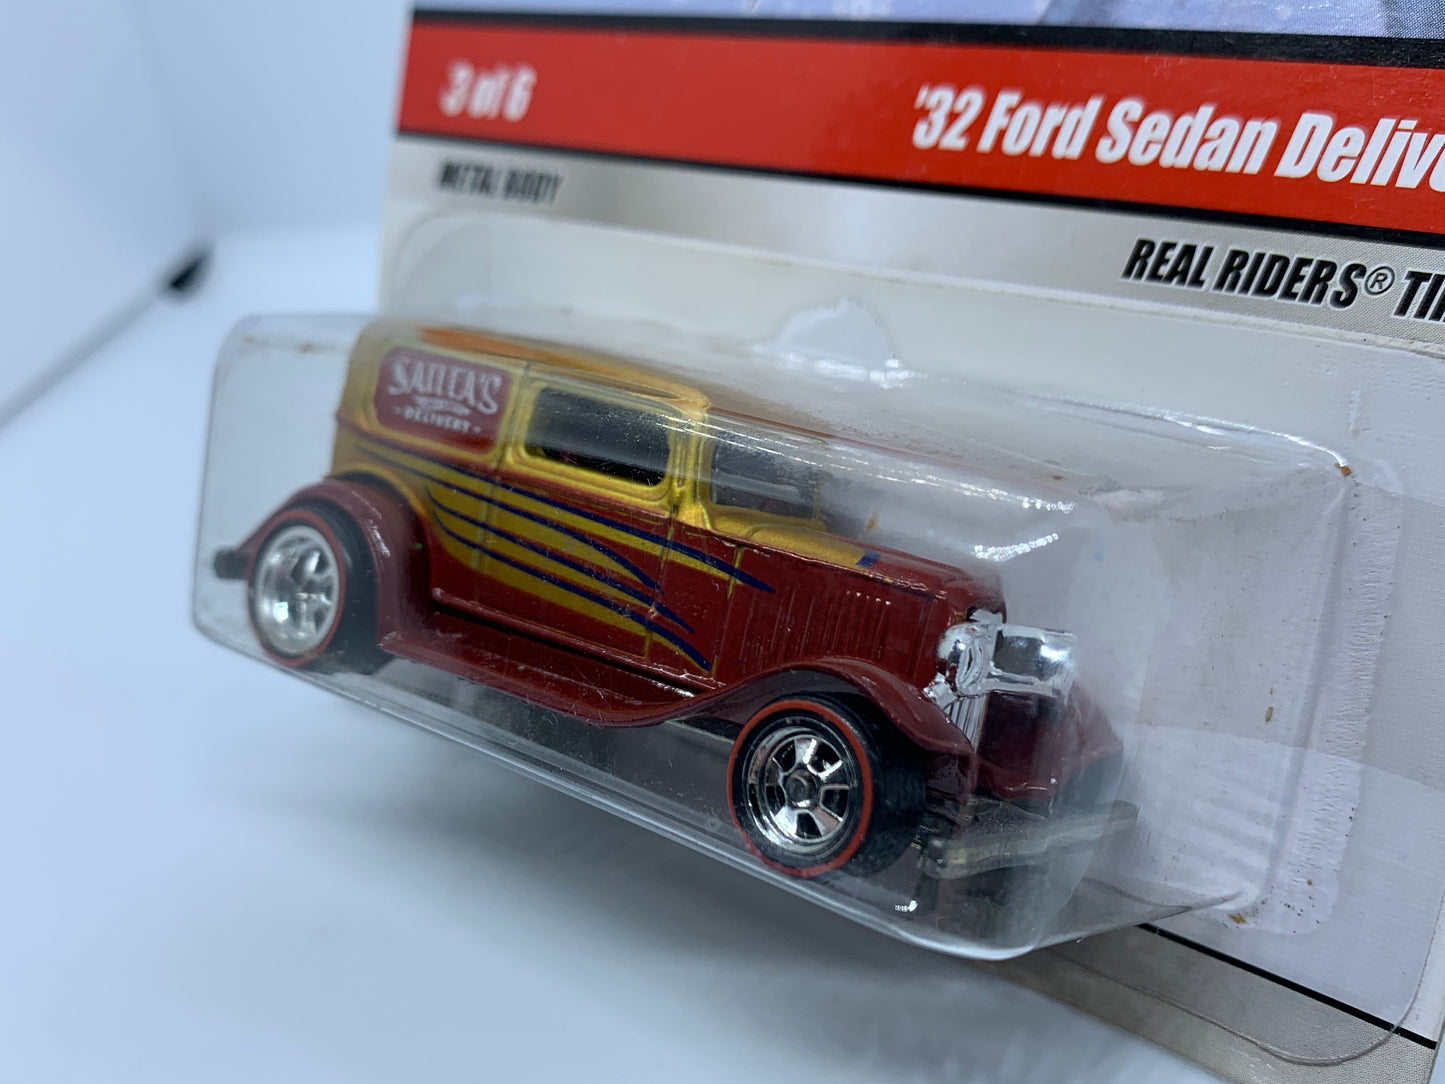 Hot Wheels Larry's Garage - '32 Ford Sedan Delivery